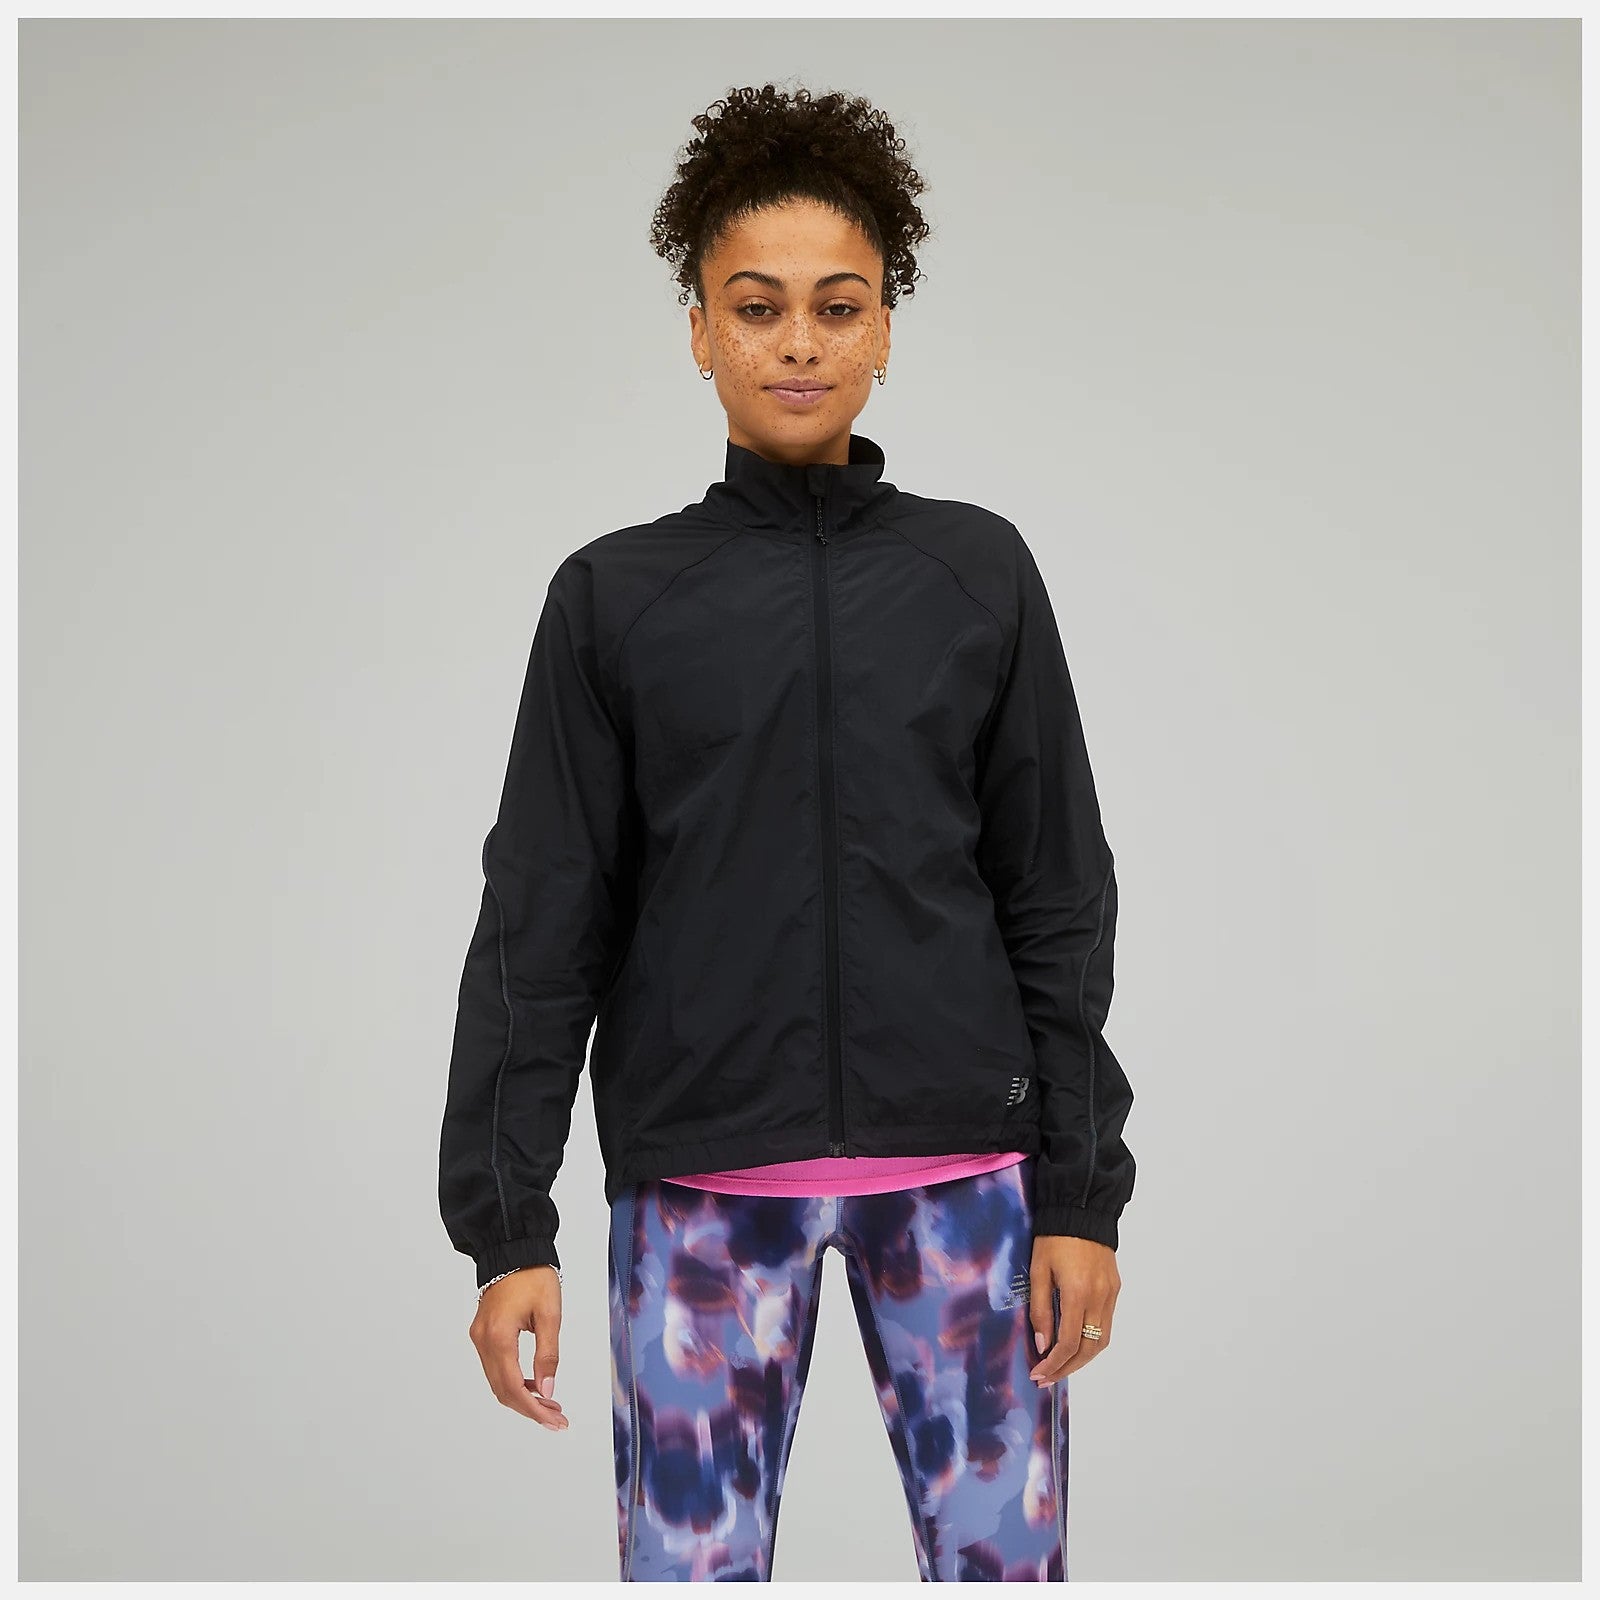 New Balance Women's Impact Run Packable Jacket Black